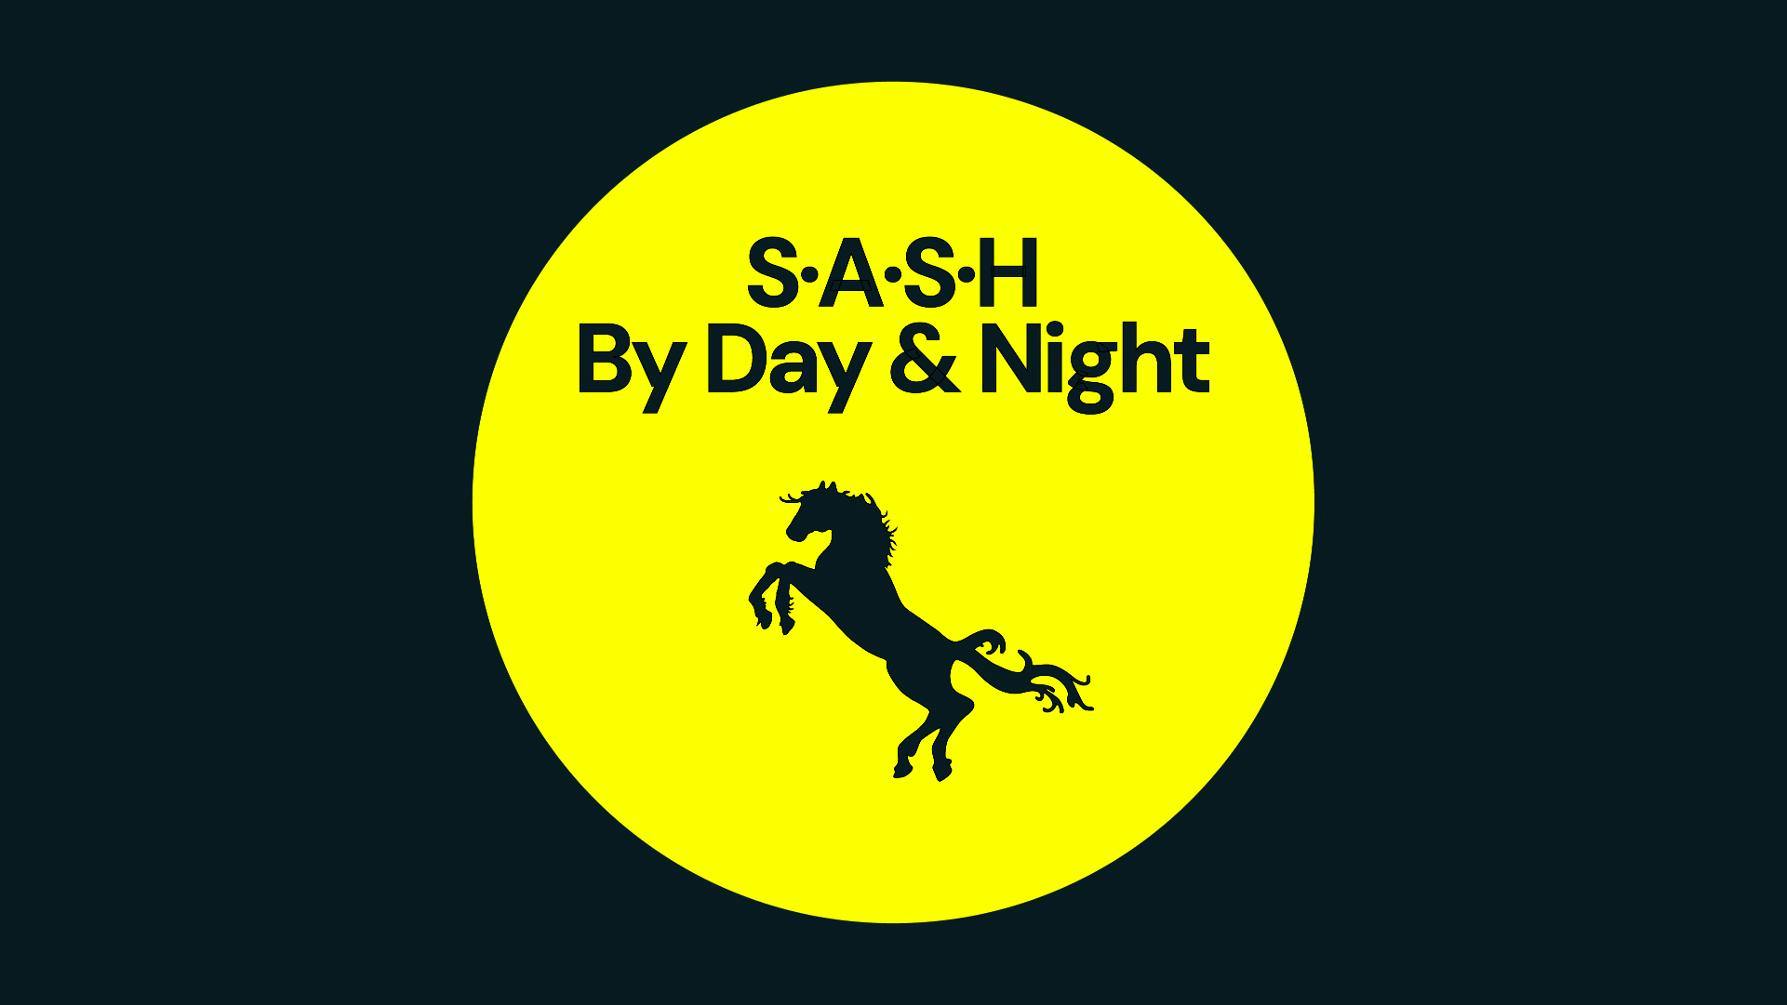 ★ S.A.S.H By Day & Night ★ DWAAL Showcase ★ Logan Baker & WINNY ★ Sunday June 2 ★